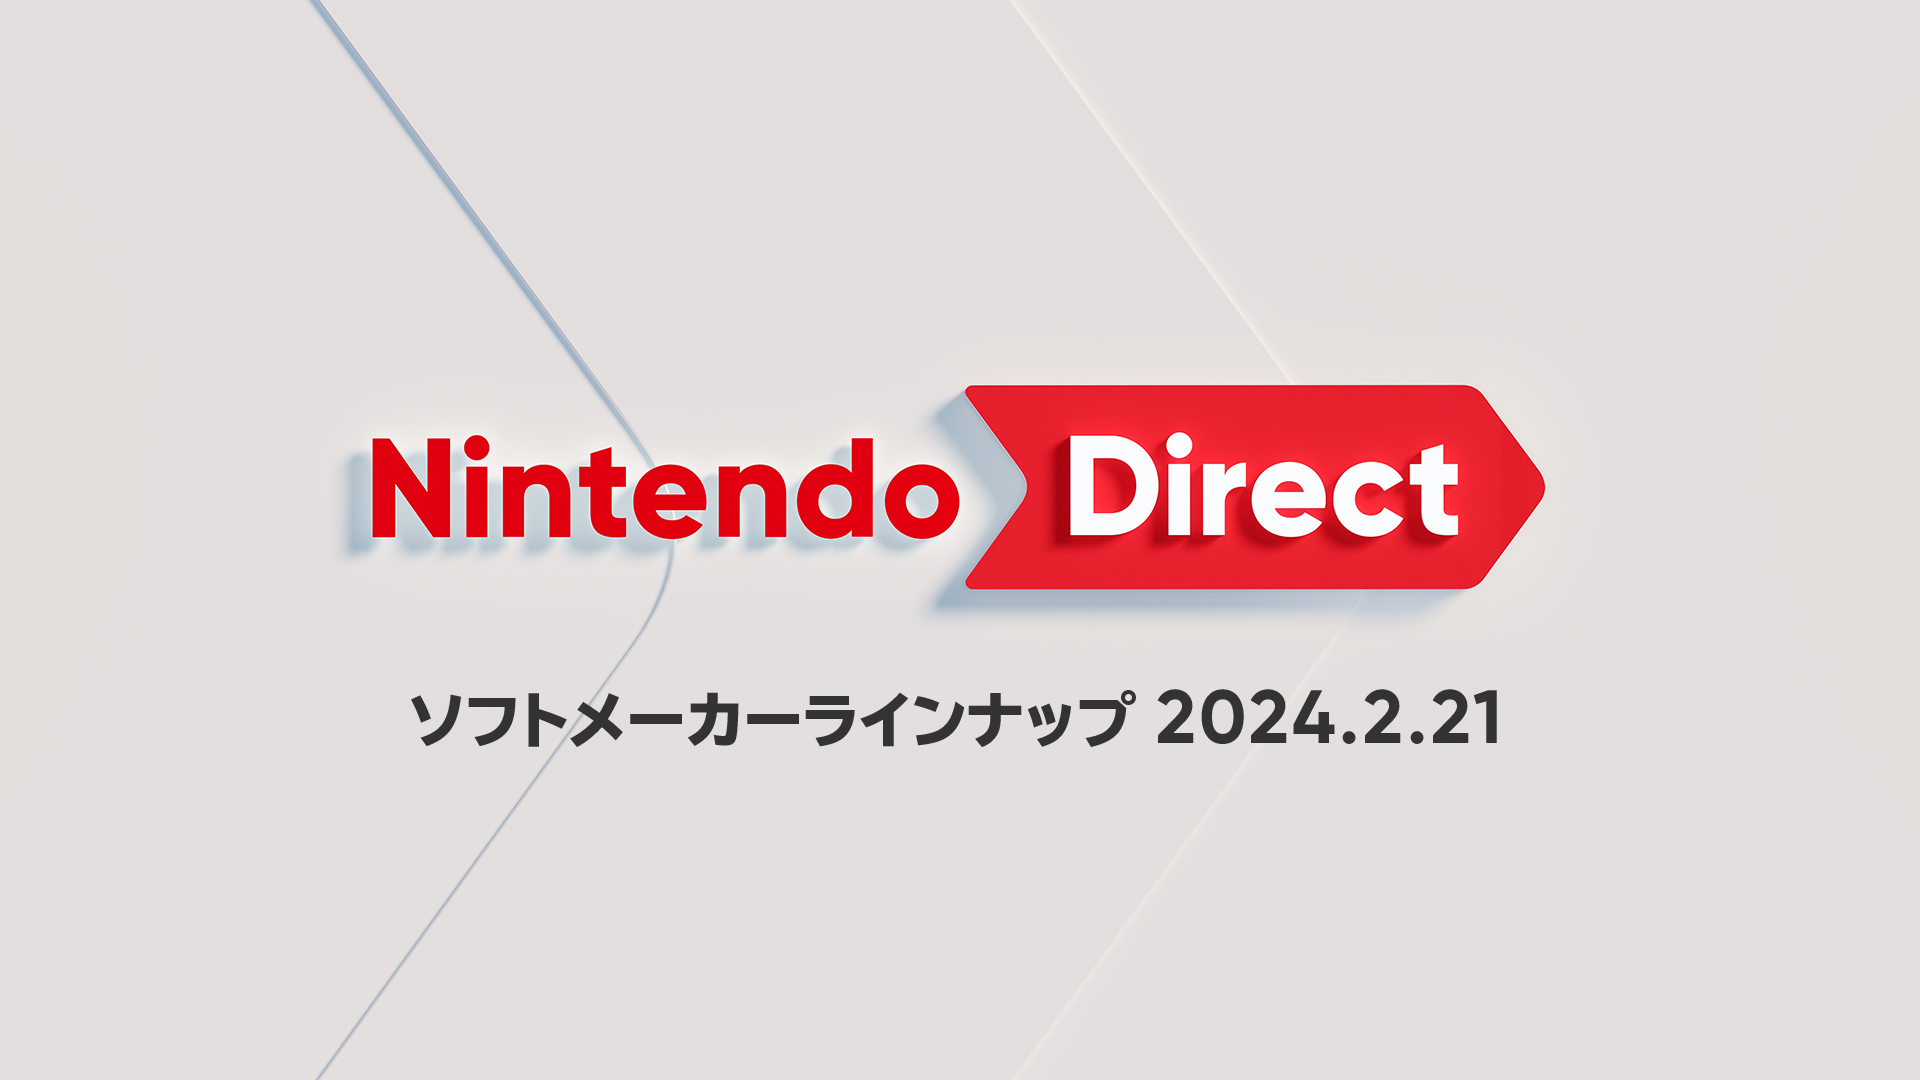 「Nintendo Direct ソフトメーカーラインナップ 2024.2.21」 もうすぐ発売！ソフトラインナップ